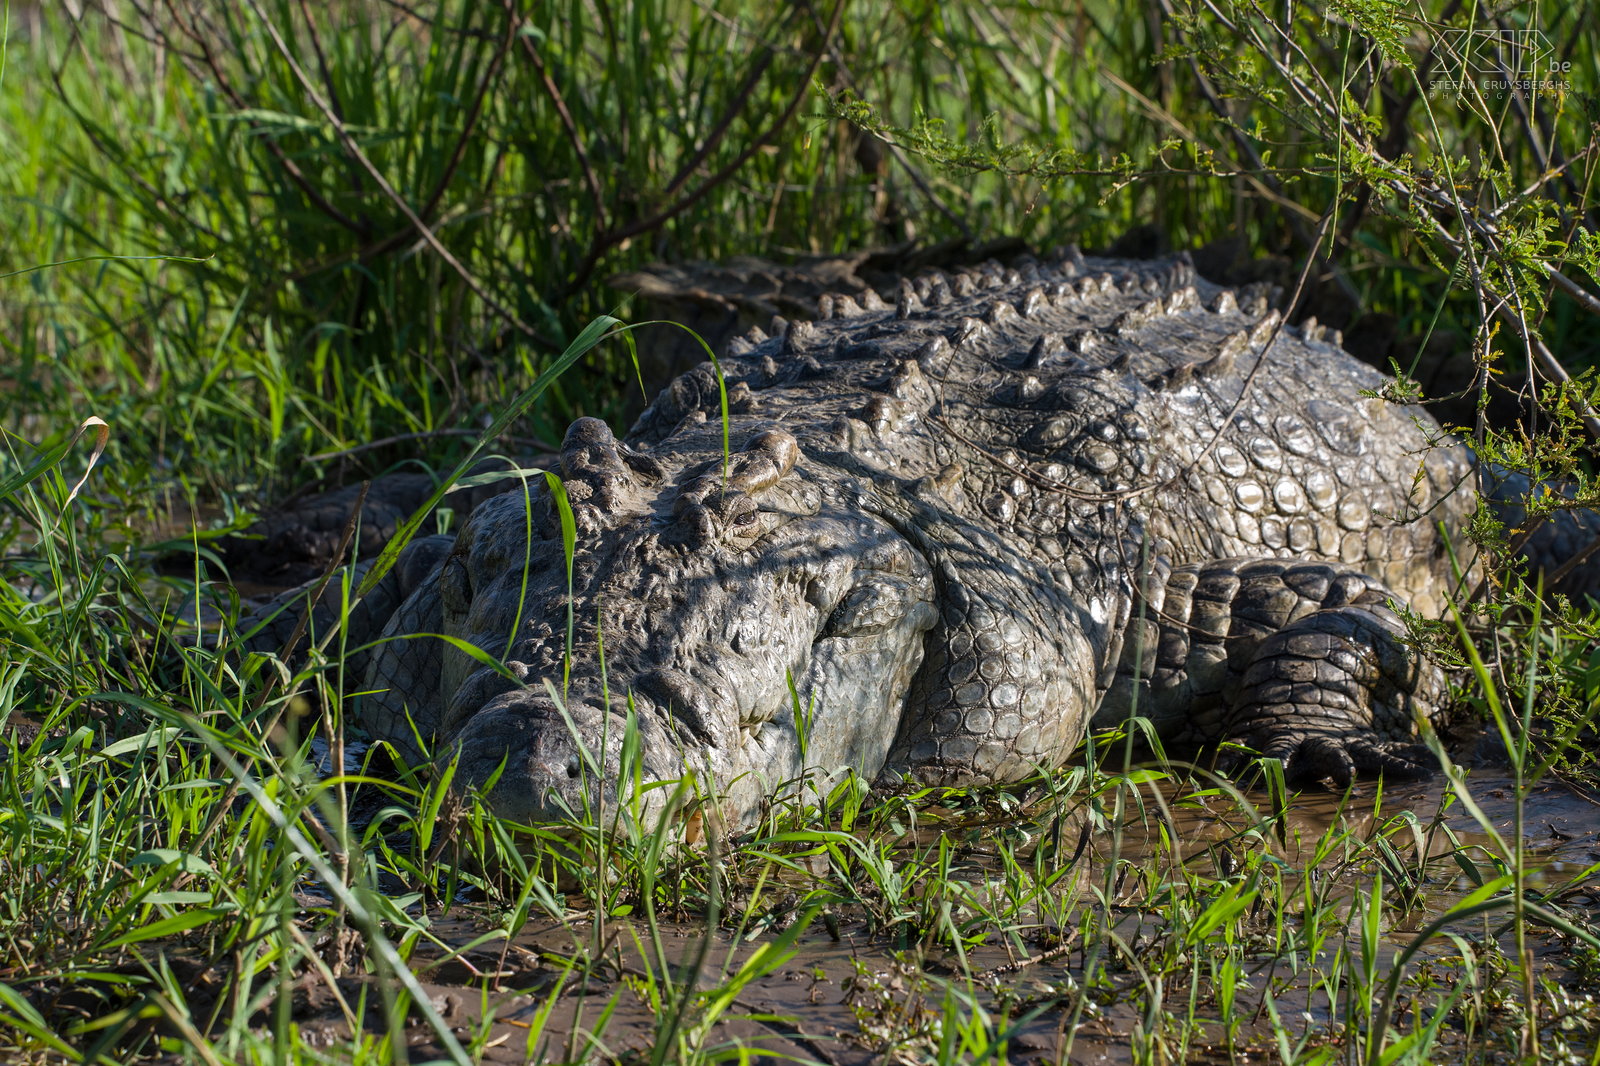 Lake Chamo - Nile crocodile  Stefan Cruysberghs